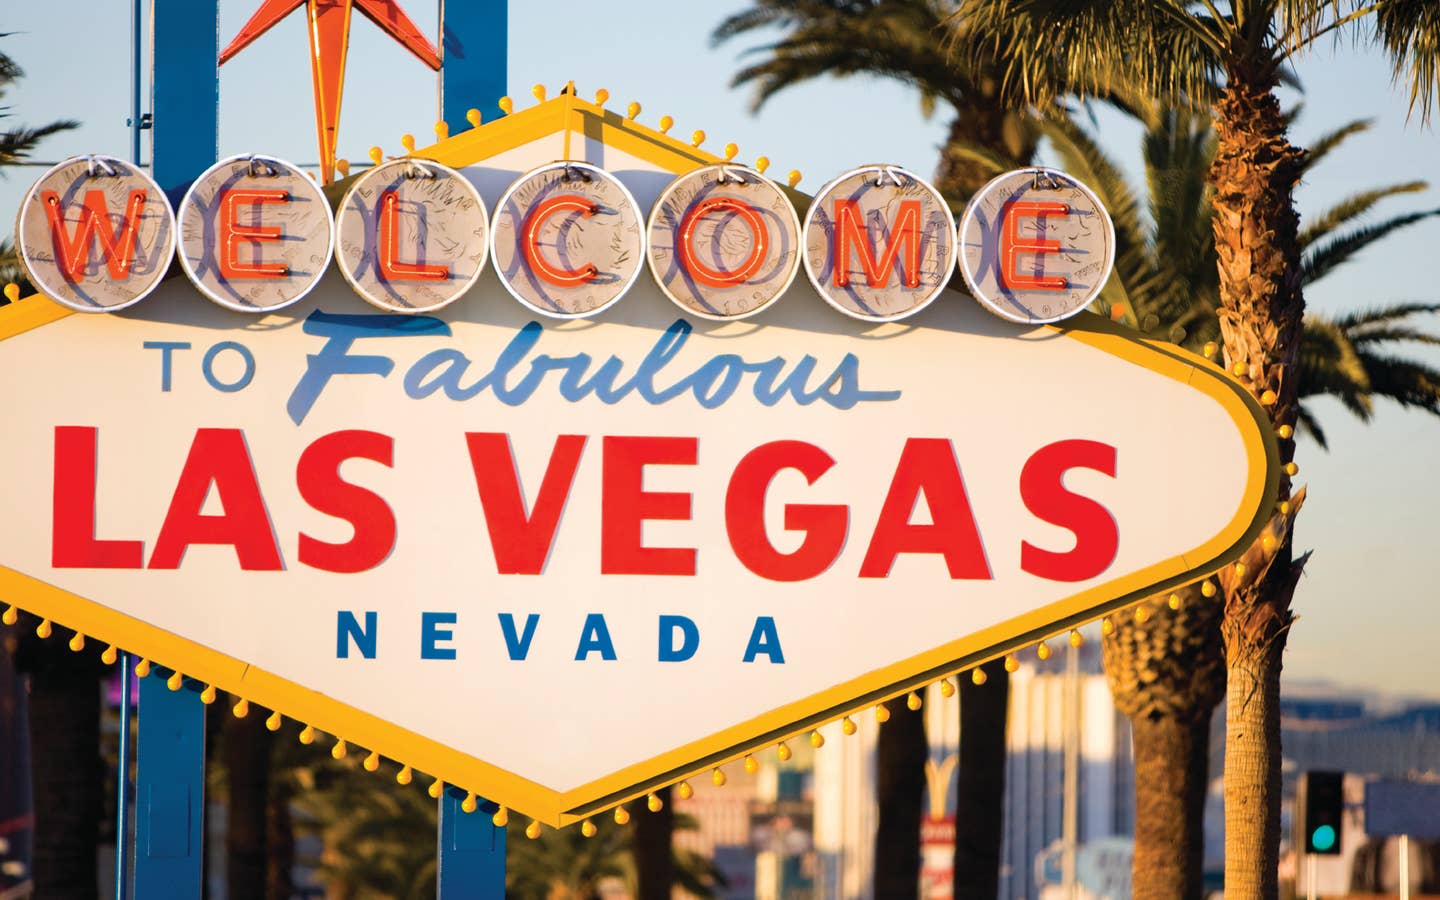 Welcome to Las Vegas sign near Desert Club Resort.